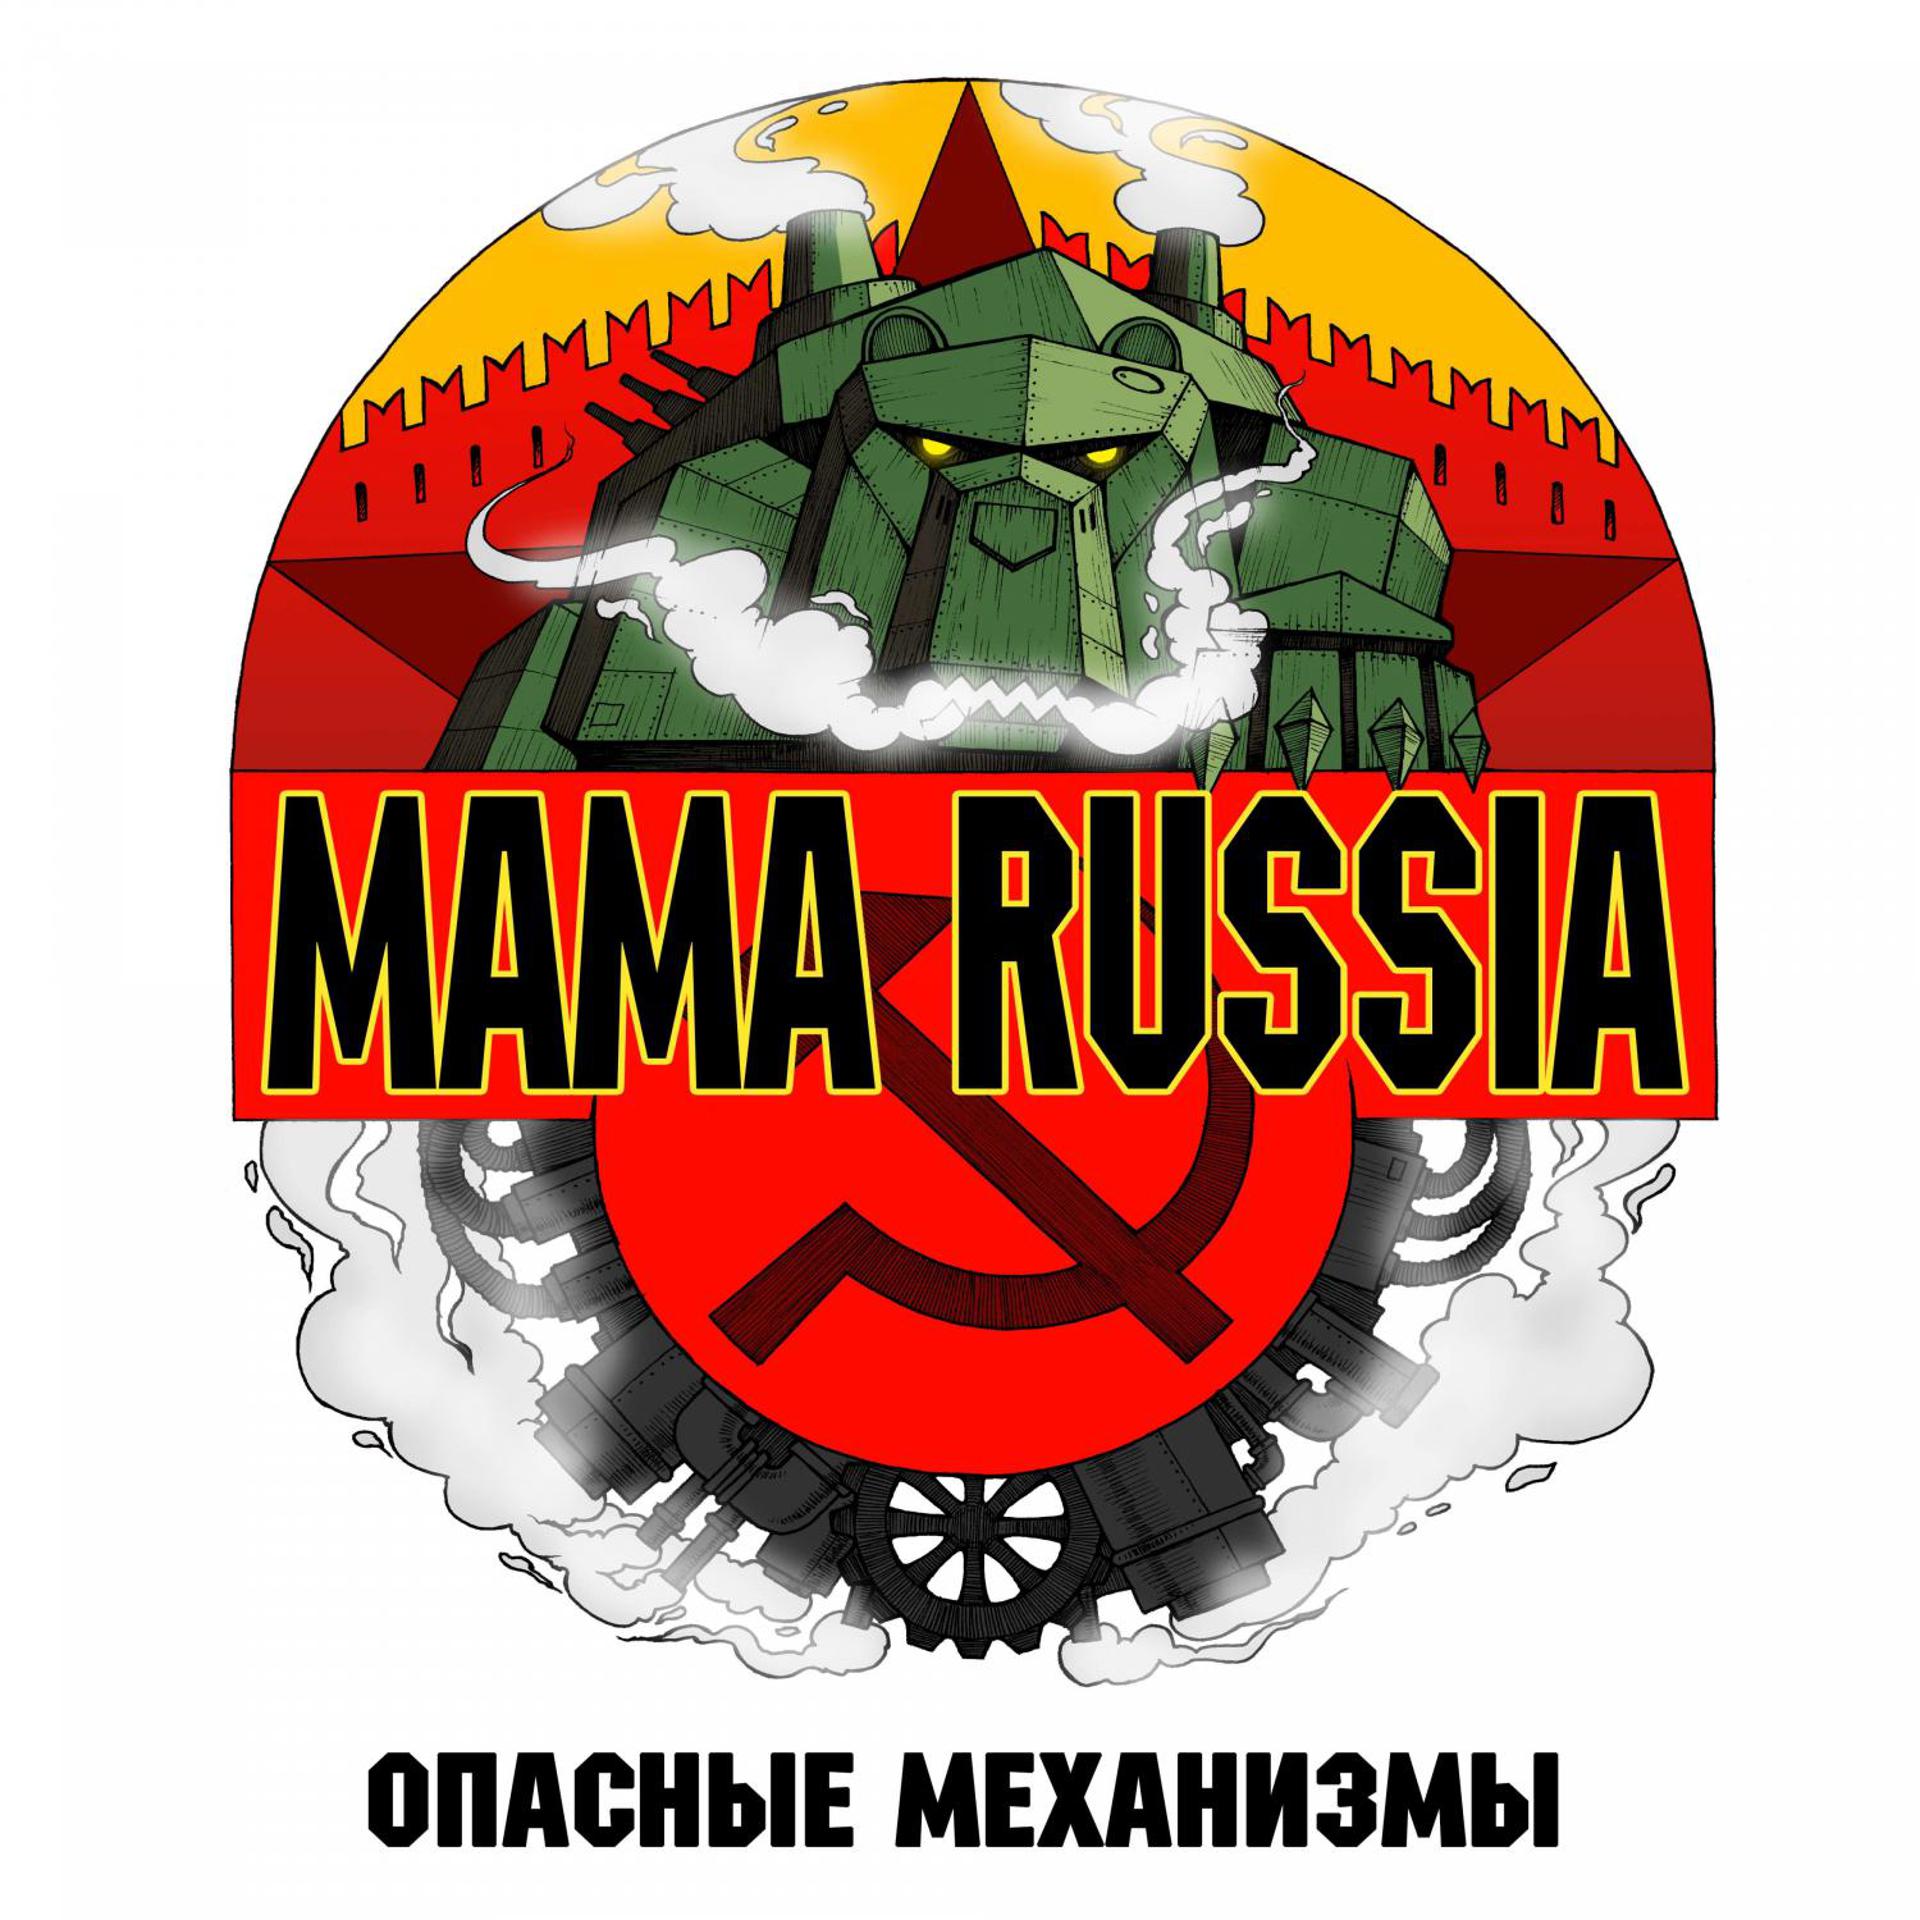 Mam на русском. Mama Russia группа. Группа опасные механизмы. Мама раша опасные механизмы. Mama Russia комсомолка.